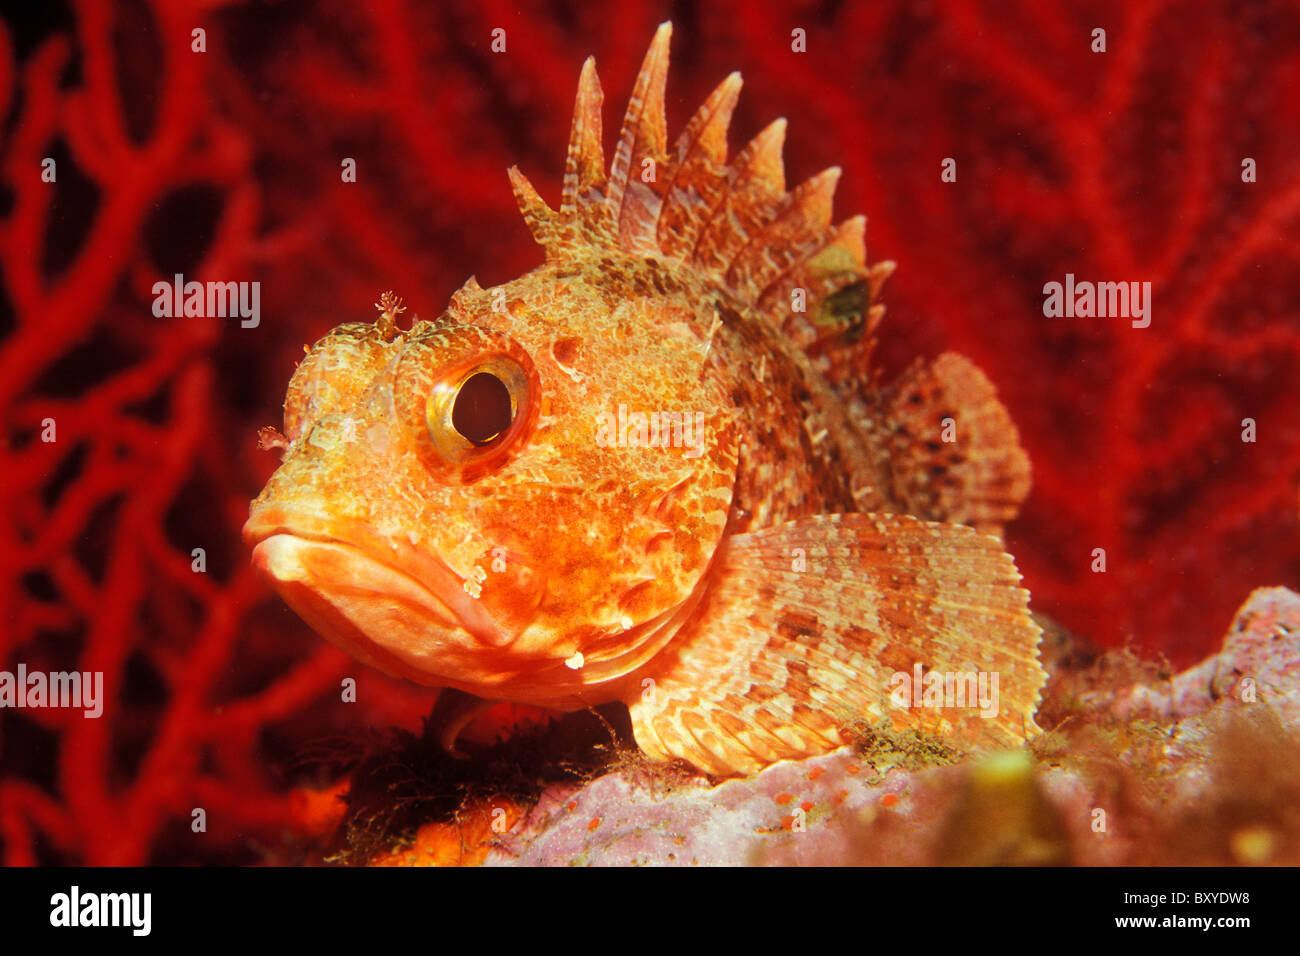 Small Red Rockfish, Scorpaena notata, Susac, Dalmatia, Adriatic Sea, Croatia Stock Photo